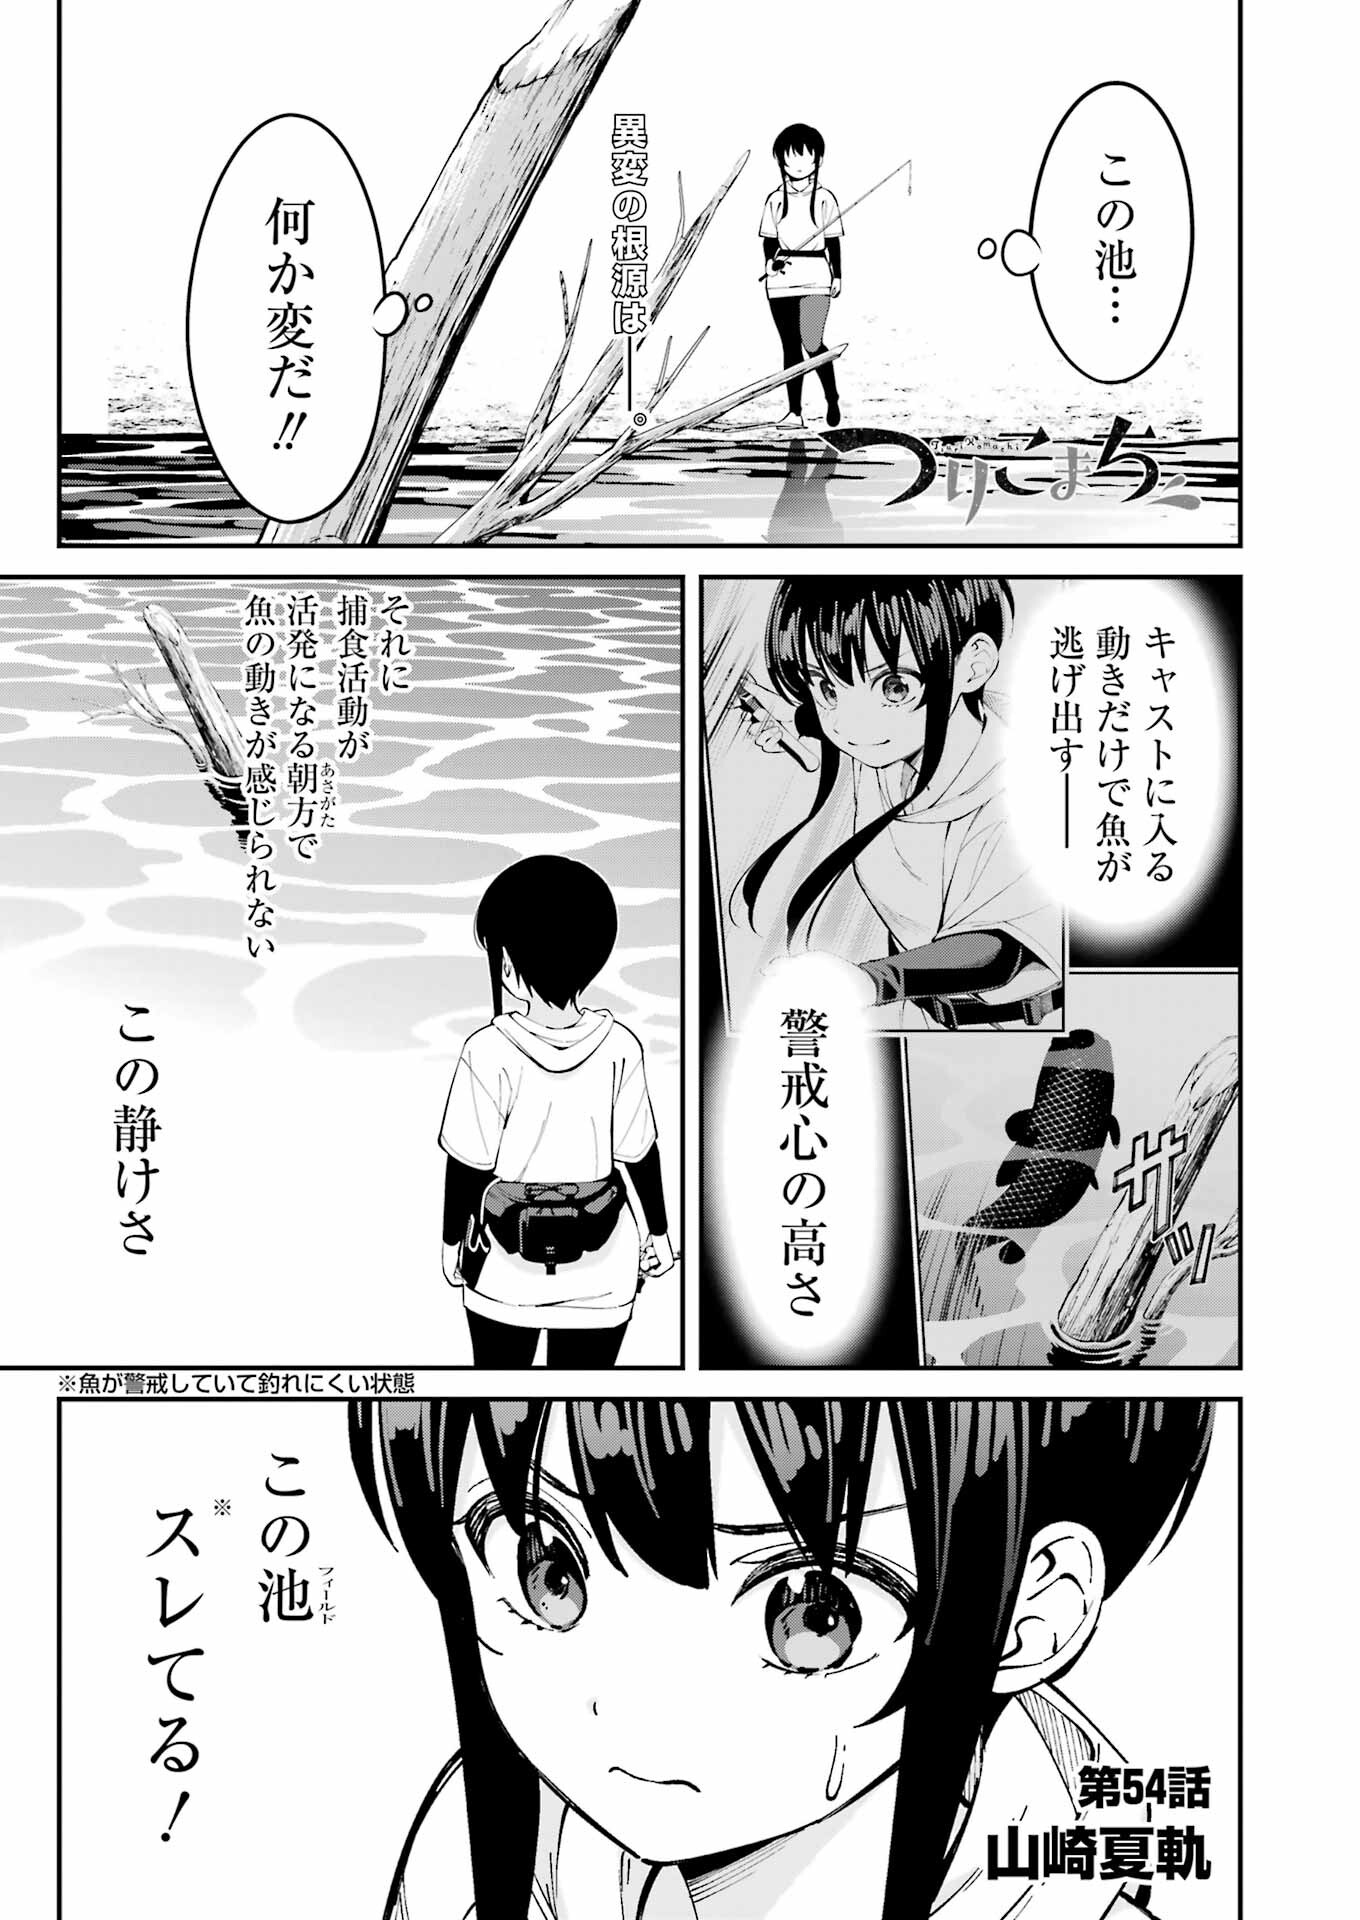 Tsuri Komachi - Chapter 54 - Page 1